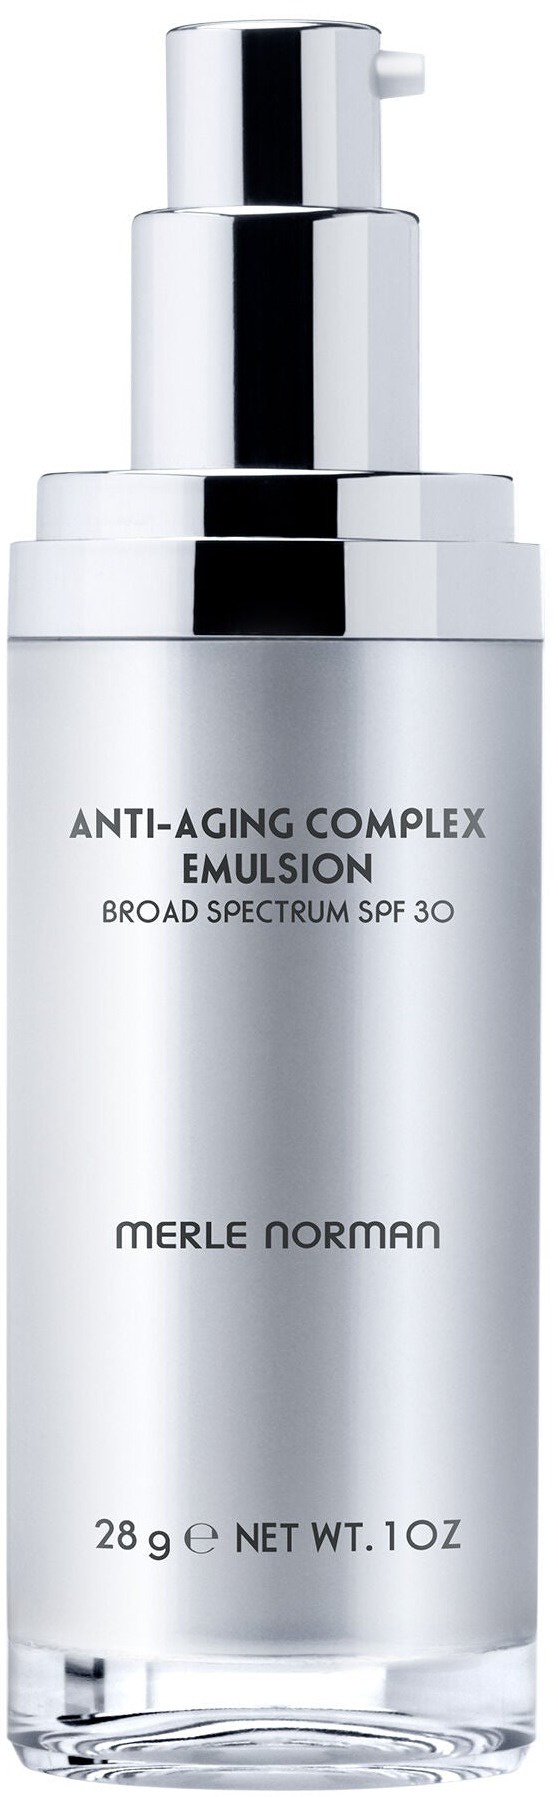 Merle Norman Anti-aging Complex Emulsion Broad Spectrum SPF 30